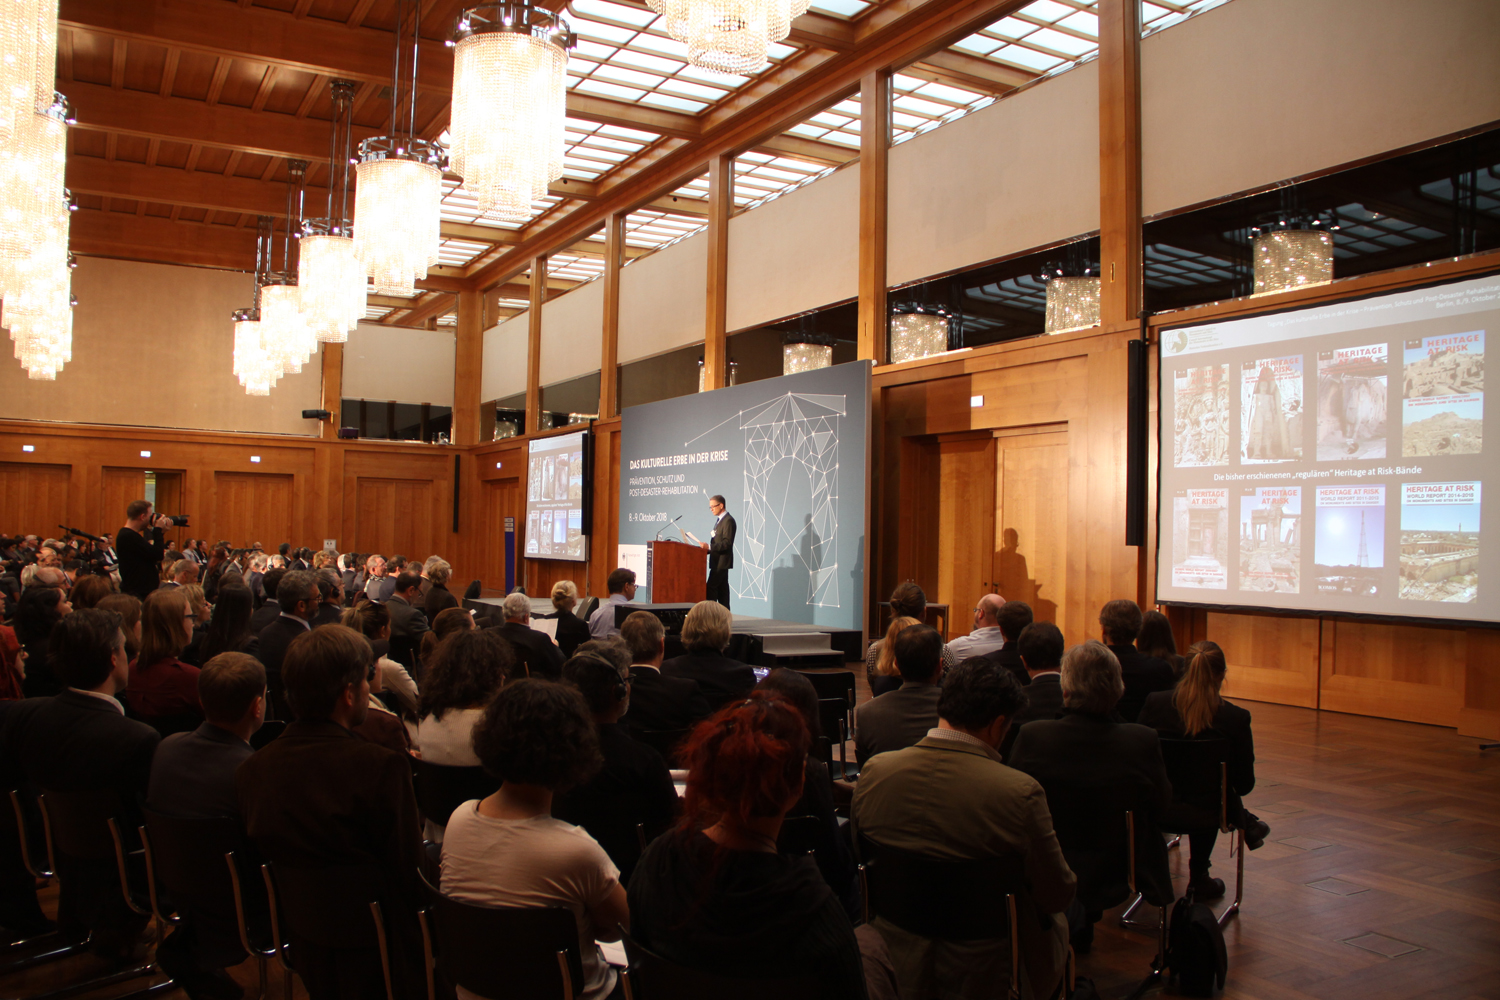 Der volle Konferenzssal belegte das große inernationale Interesse am Thema Kulturgüterschutz in Krisengebieten. Foto: Tatjana Held.